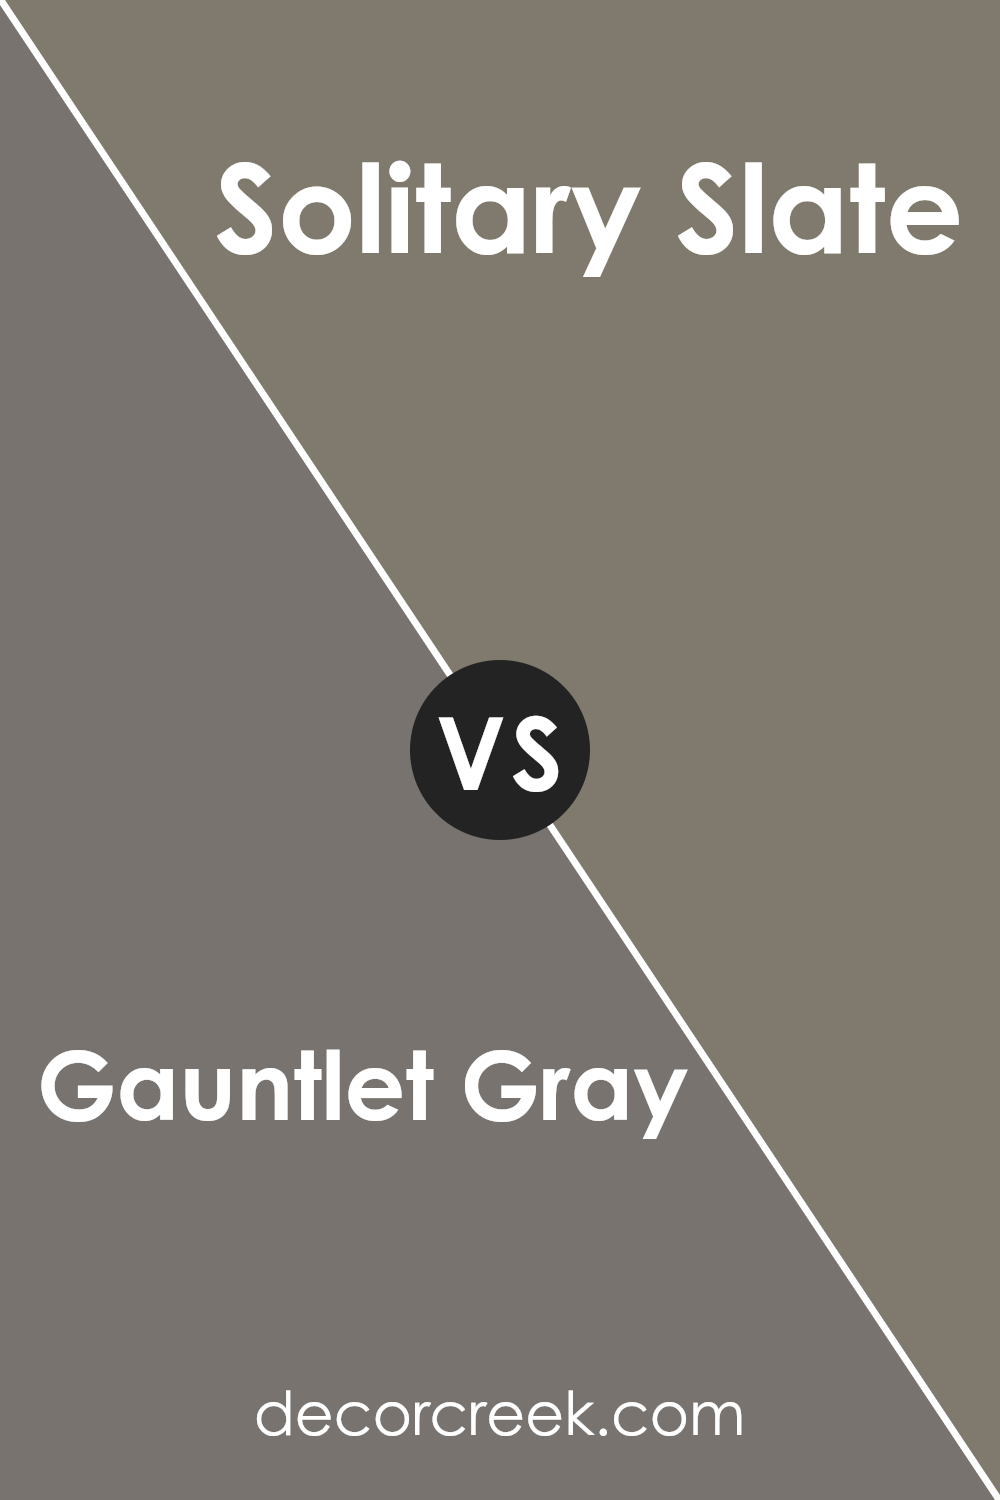 gauntlet_gray_sw_7019_vs_solitary_slate_sw_9598